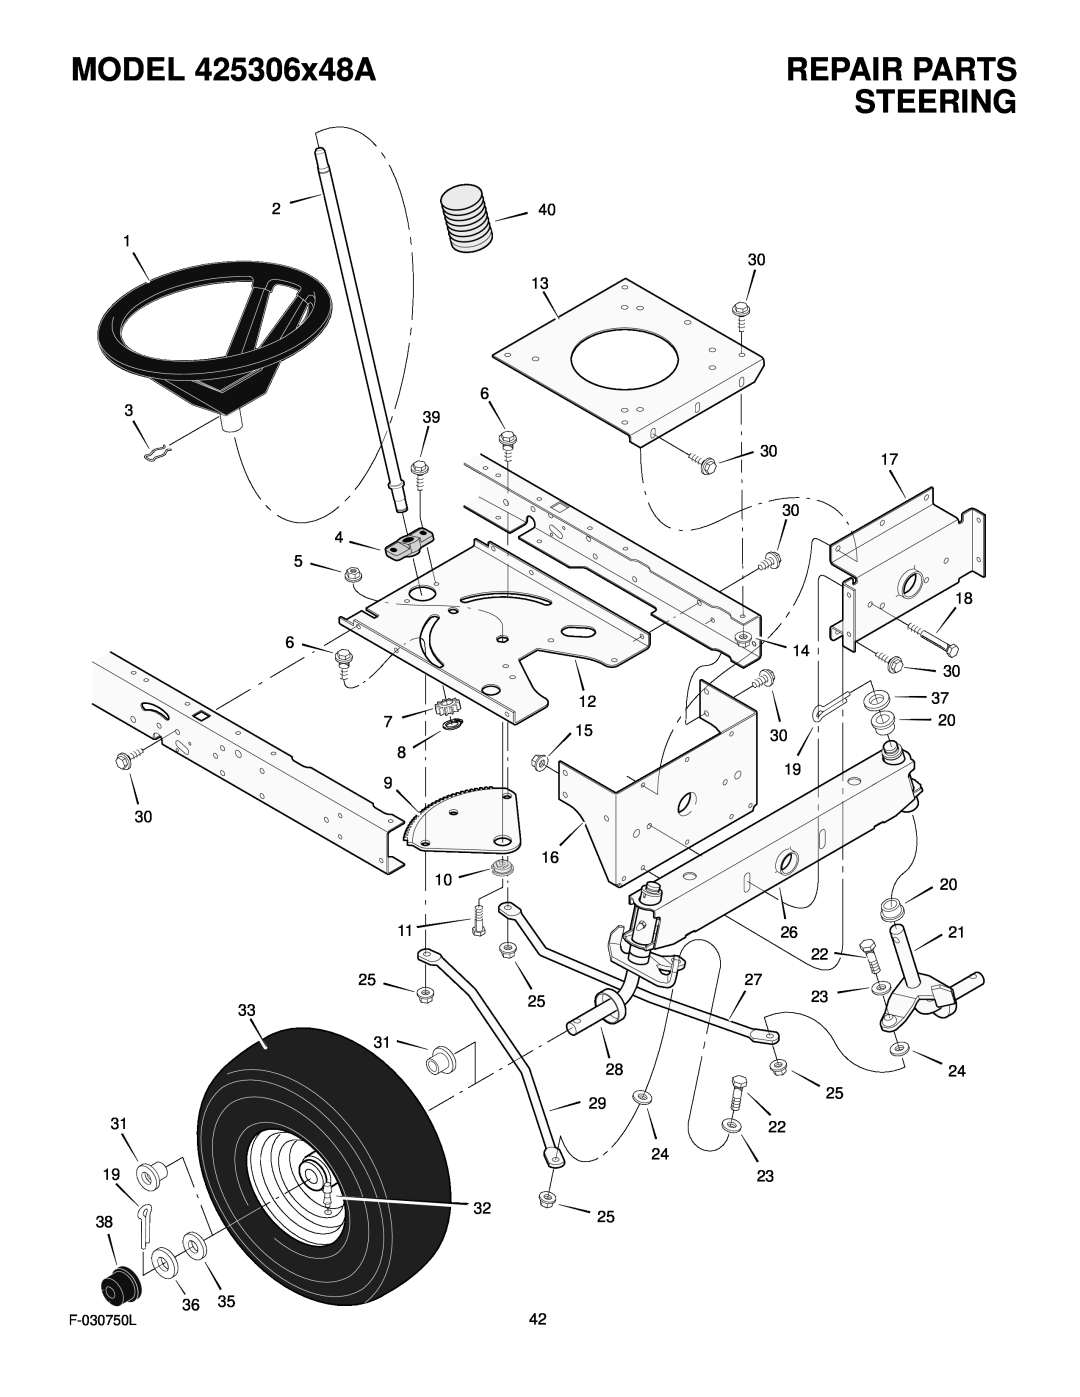 Murray manual Steering, MODEL 425306x48A, Repair Parts 